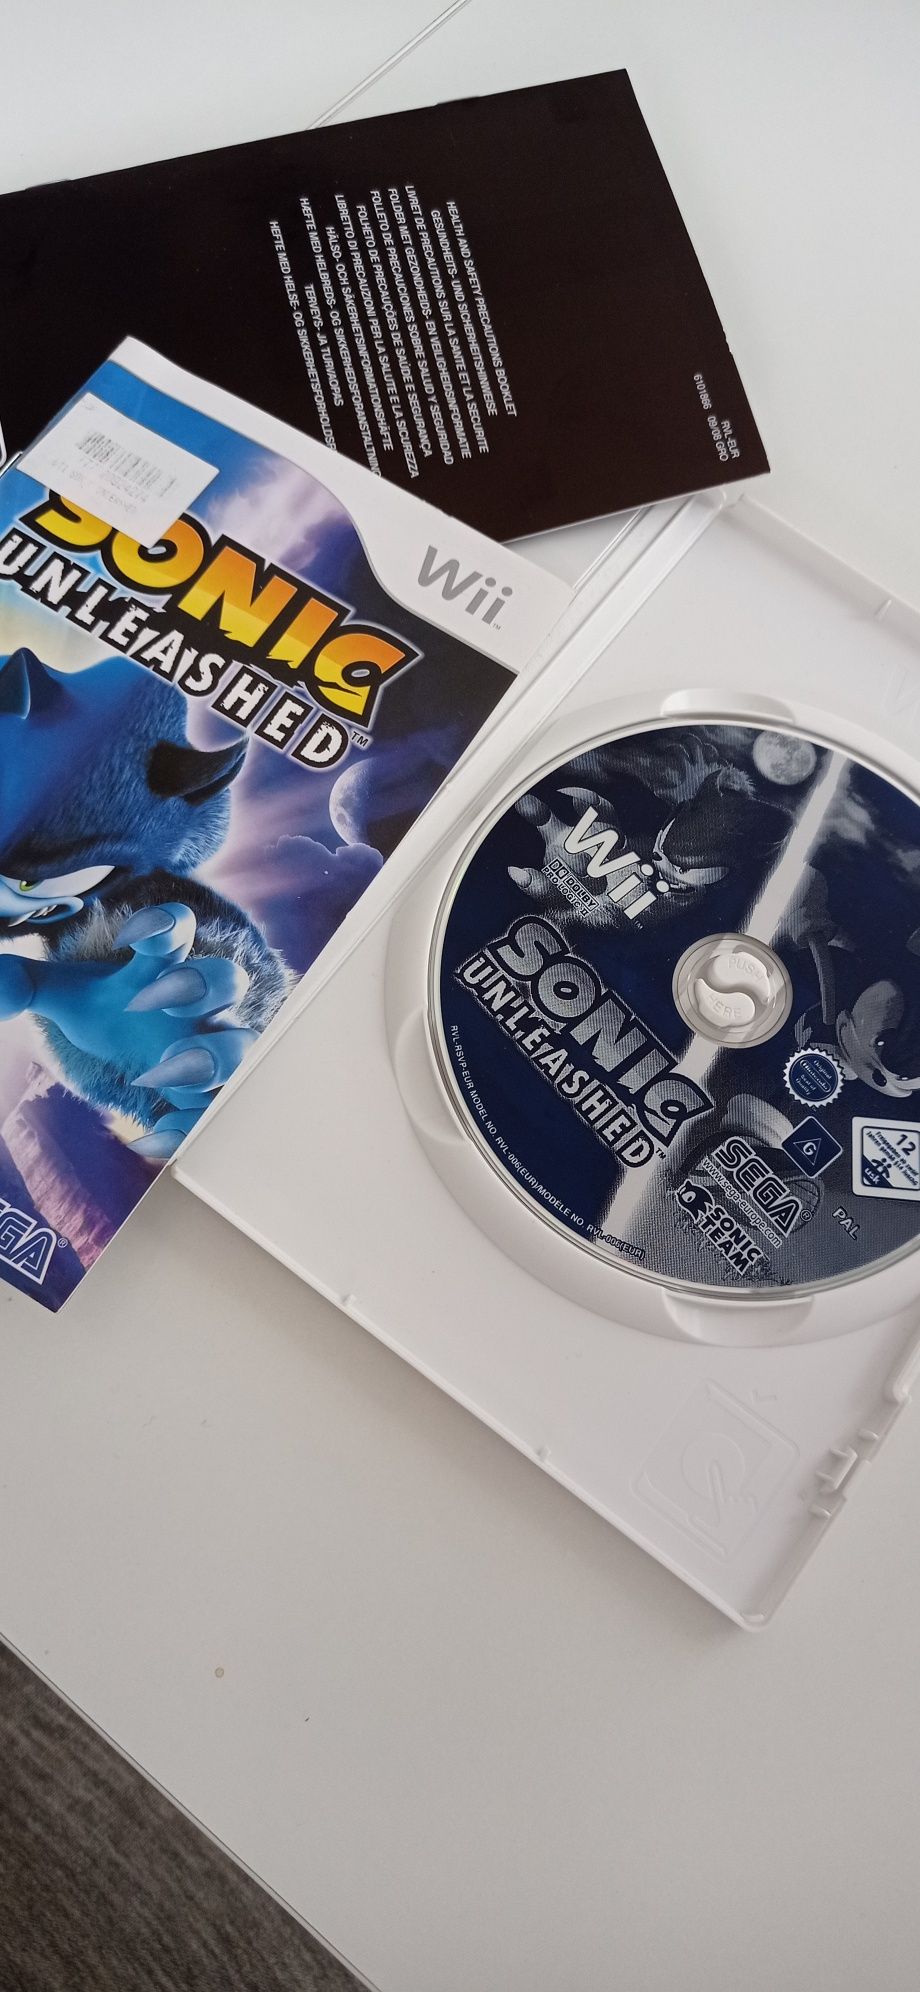 Gra Sonic unleashed, Nintendo Wii